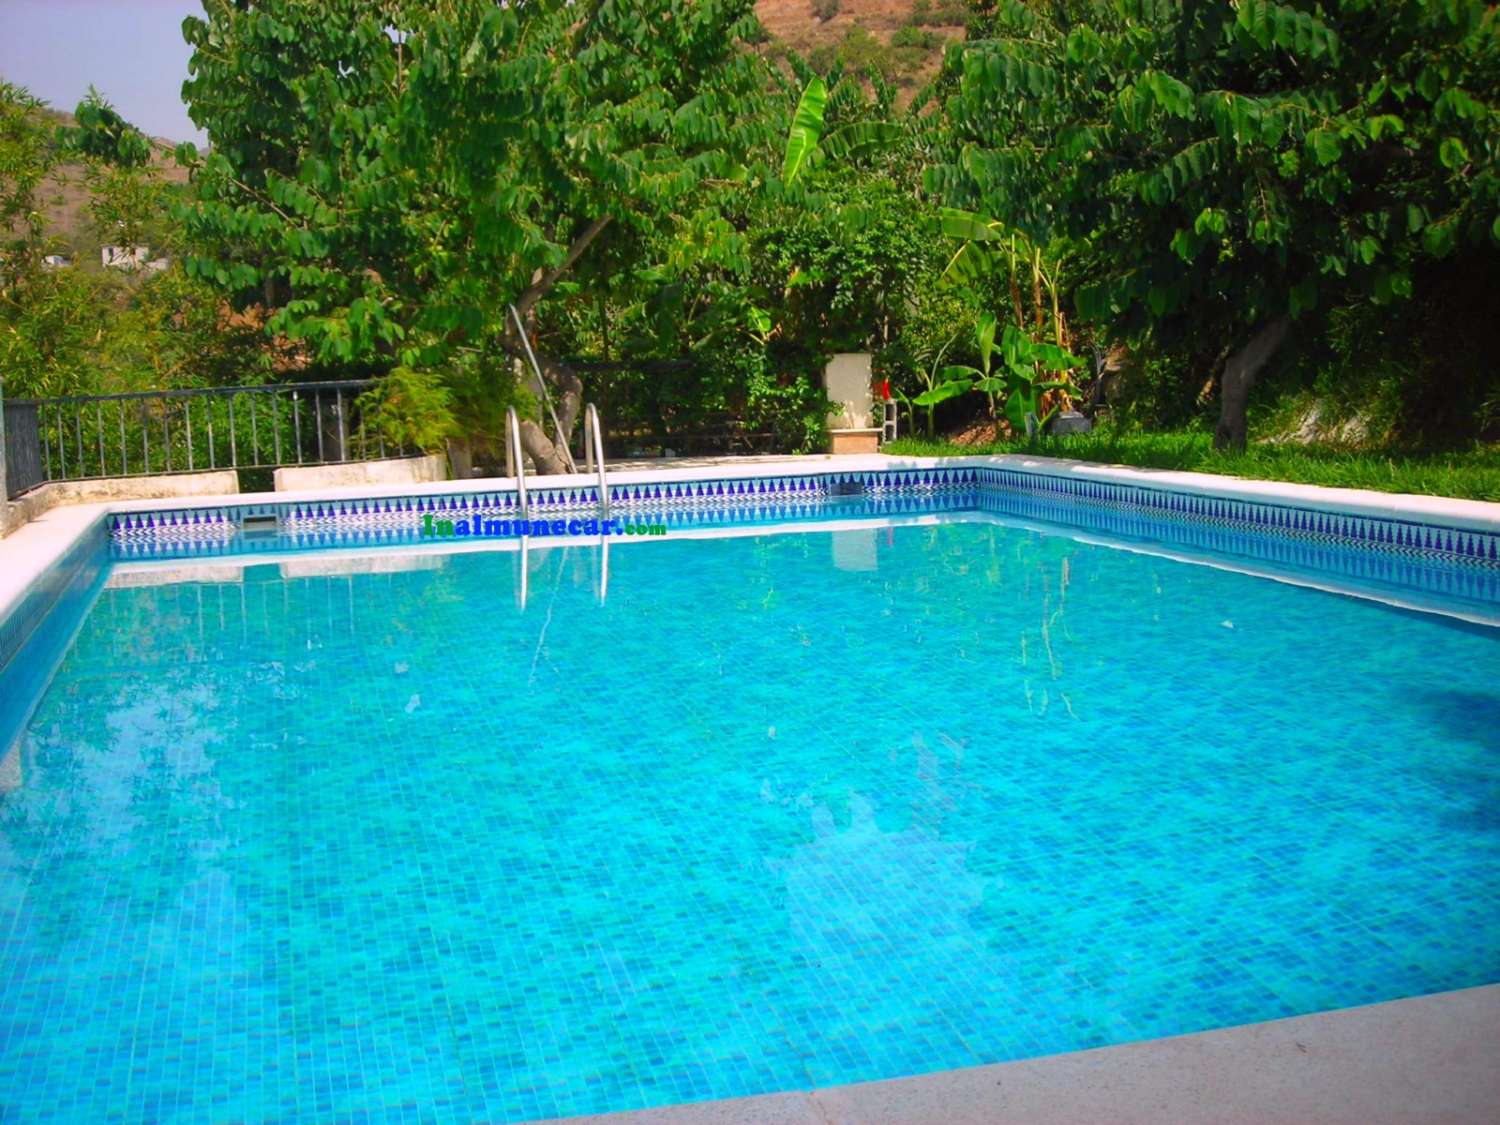 Se vende casa de Campo muy cerca del centro de Almuñécar, con gran piscina.